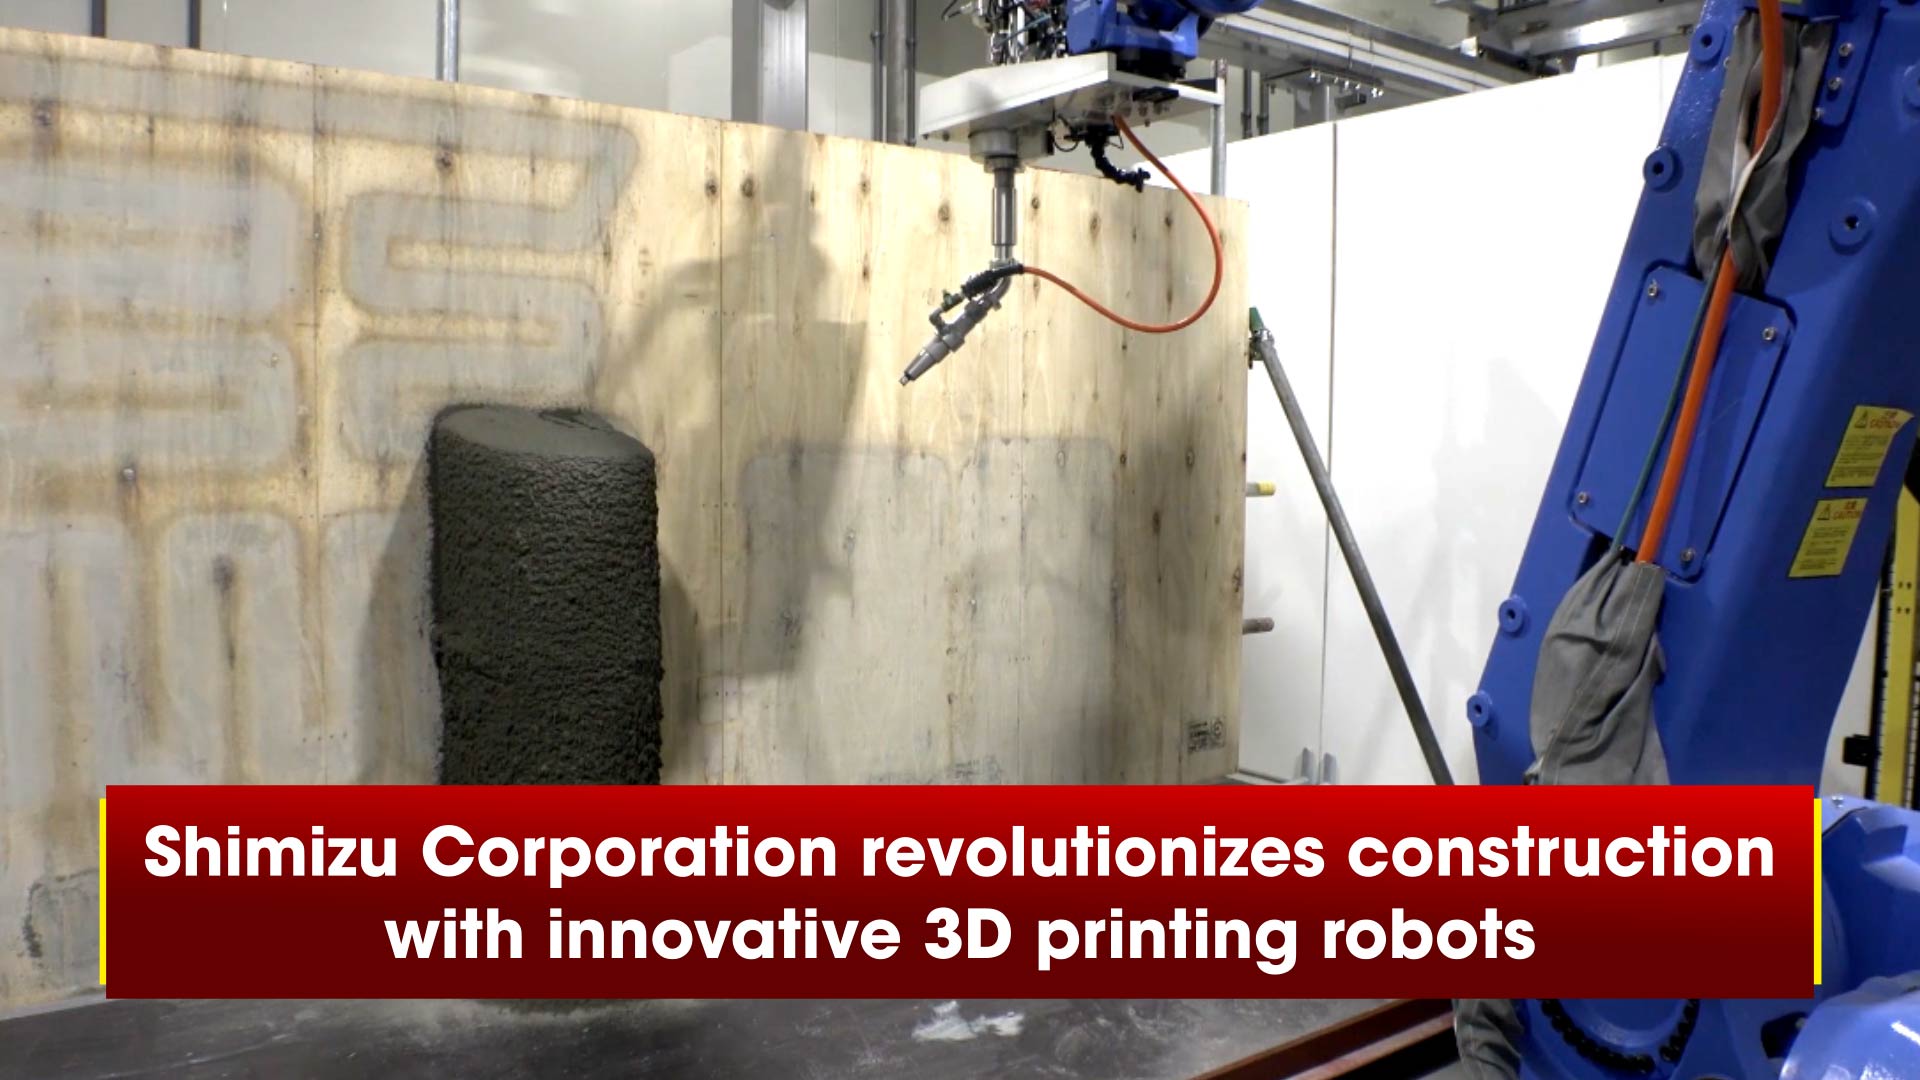 Shimizu Corporation revolutionizes construction with innovative 3D printing robots